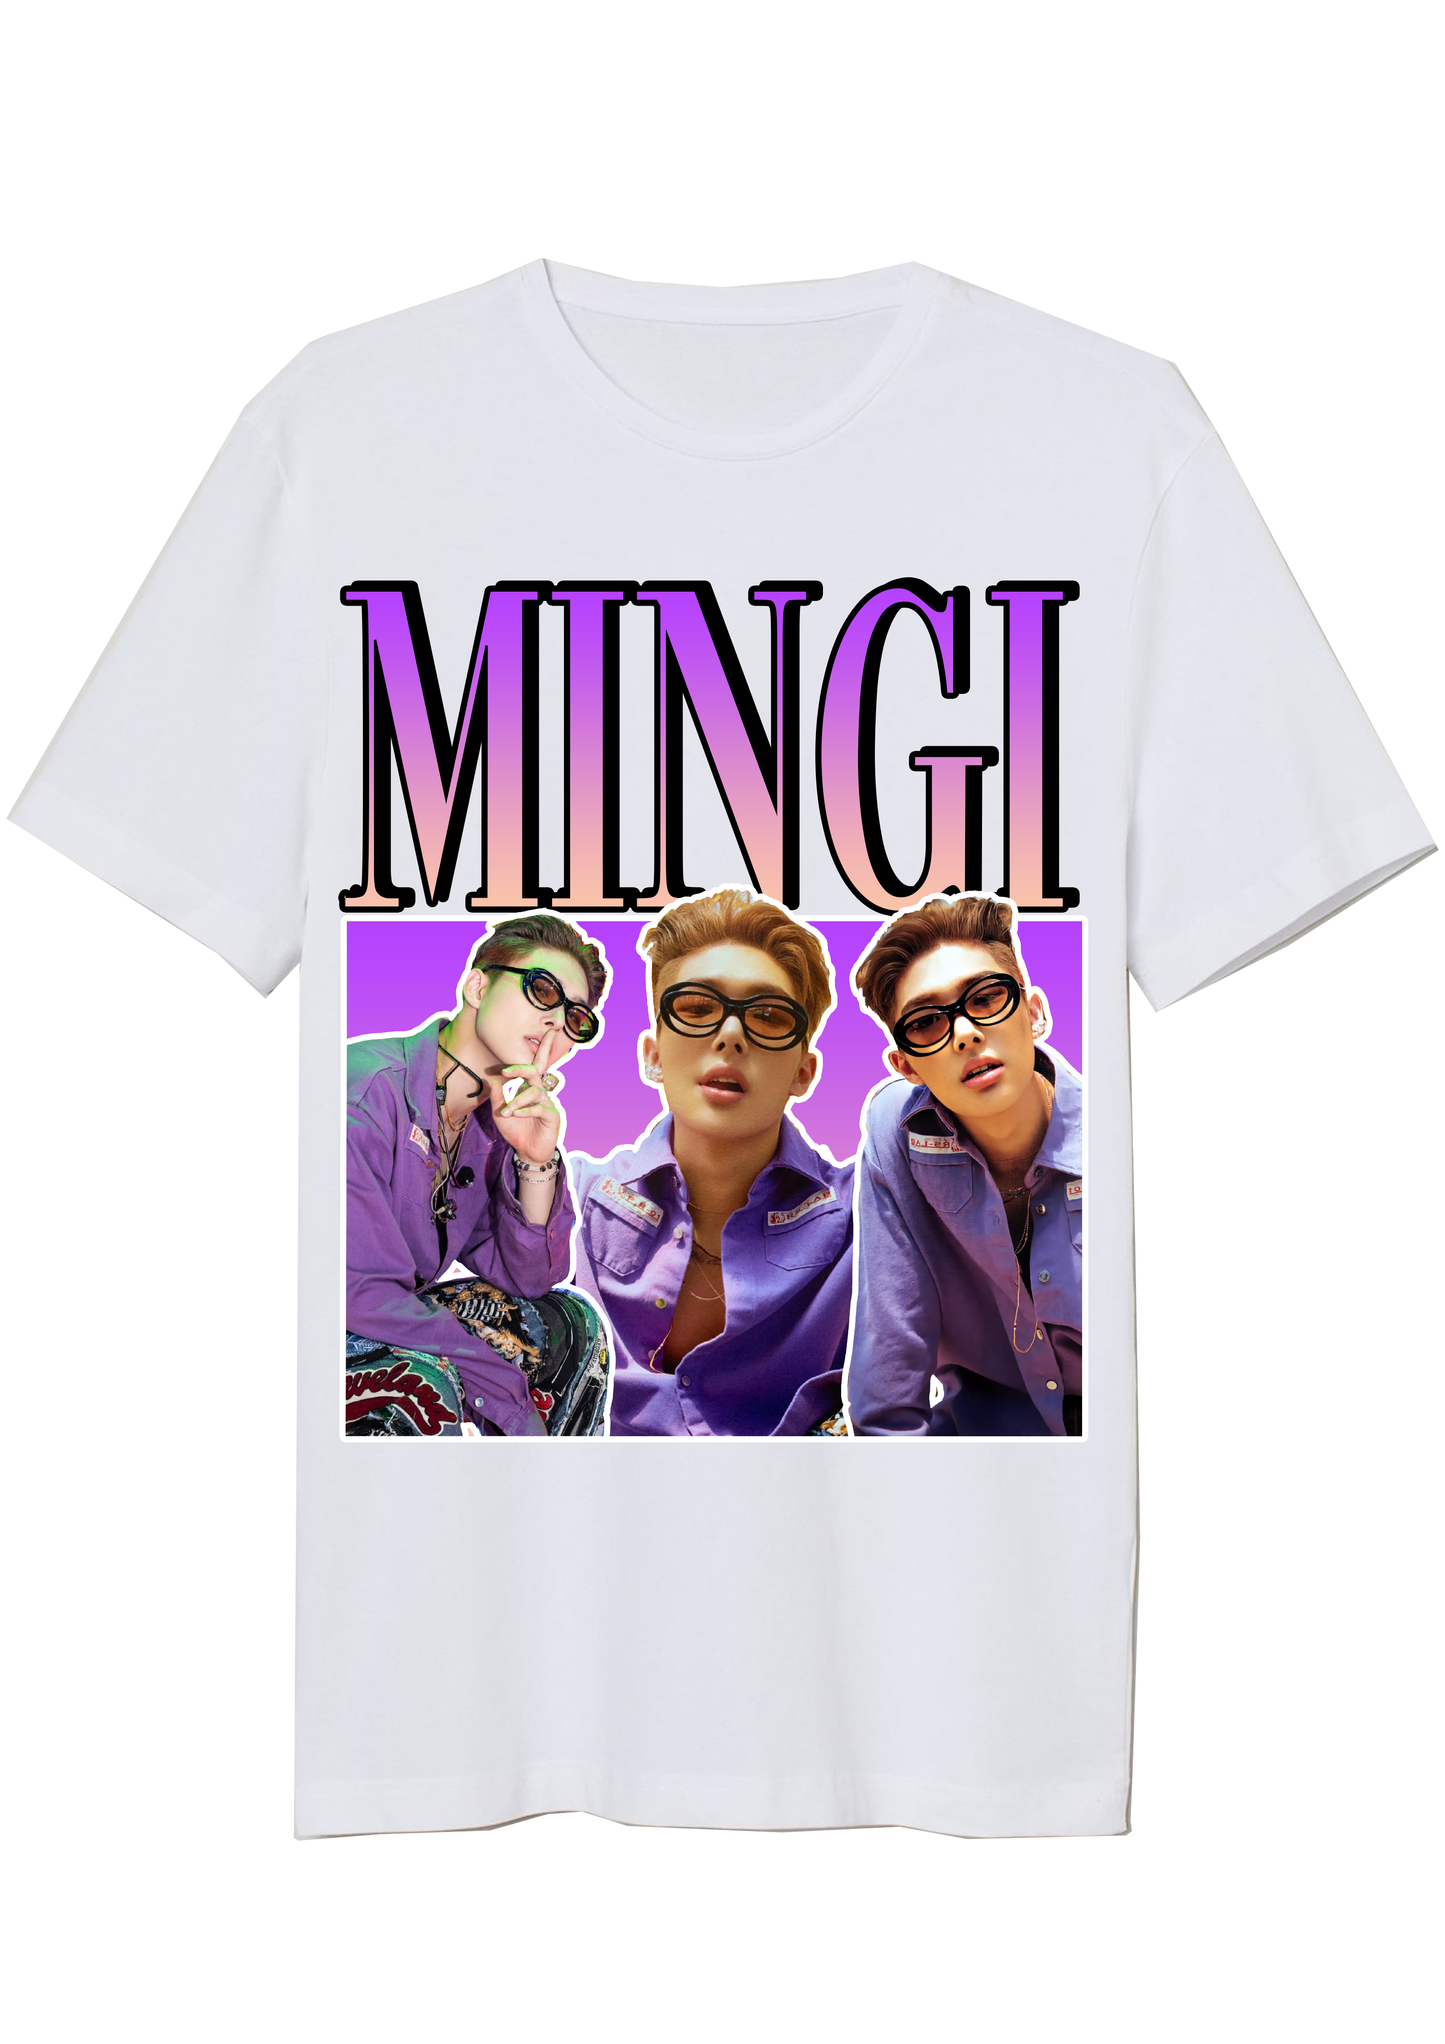 Mingi Vintage T-Shirt